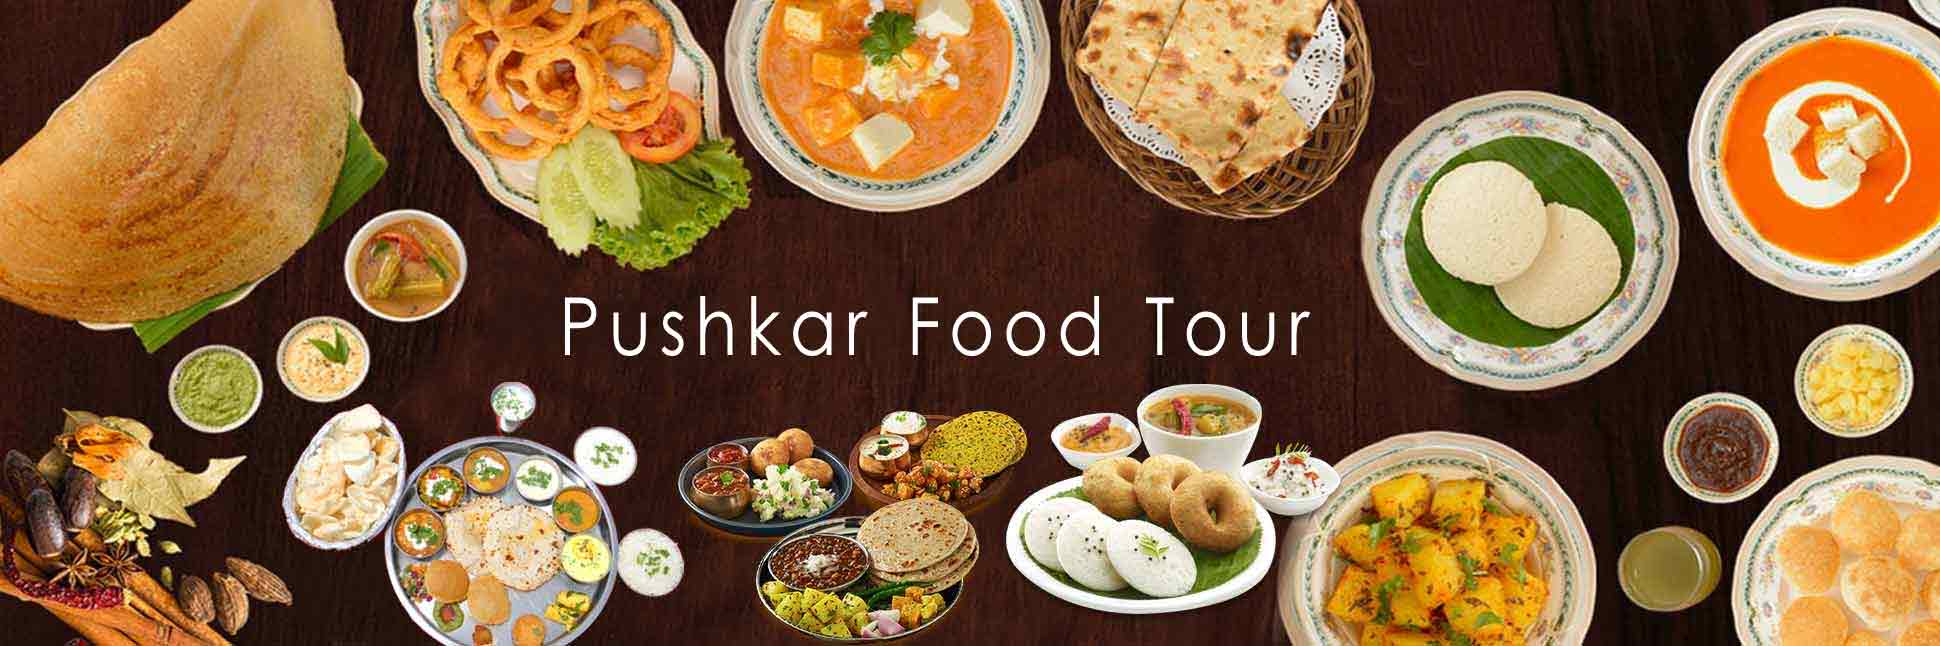 Pushkar Food Tour